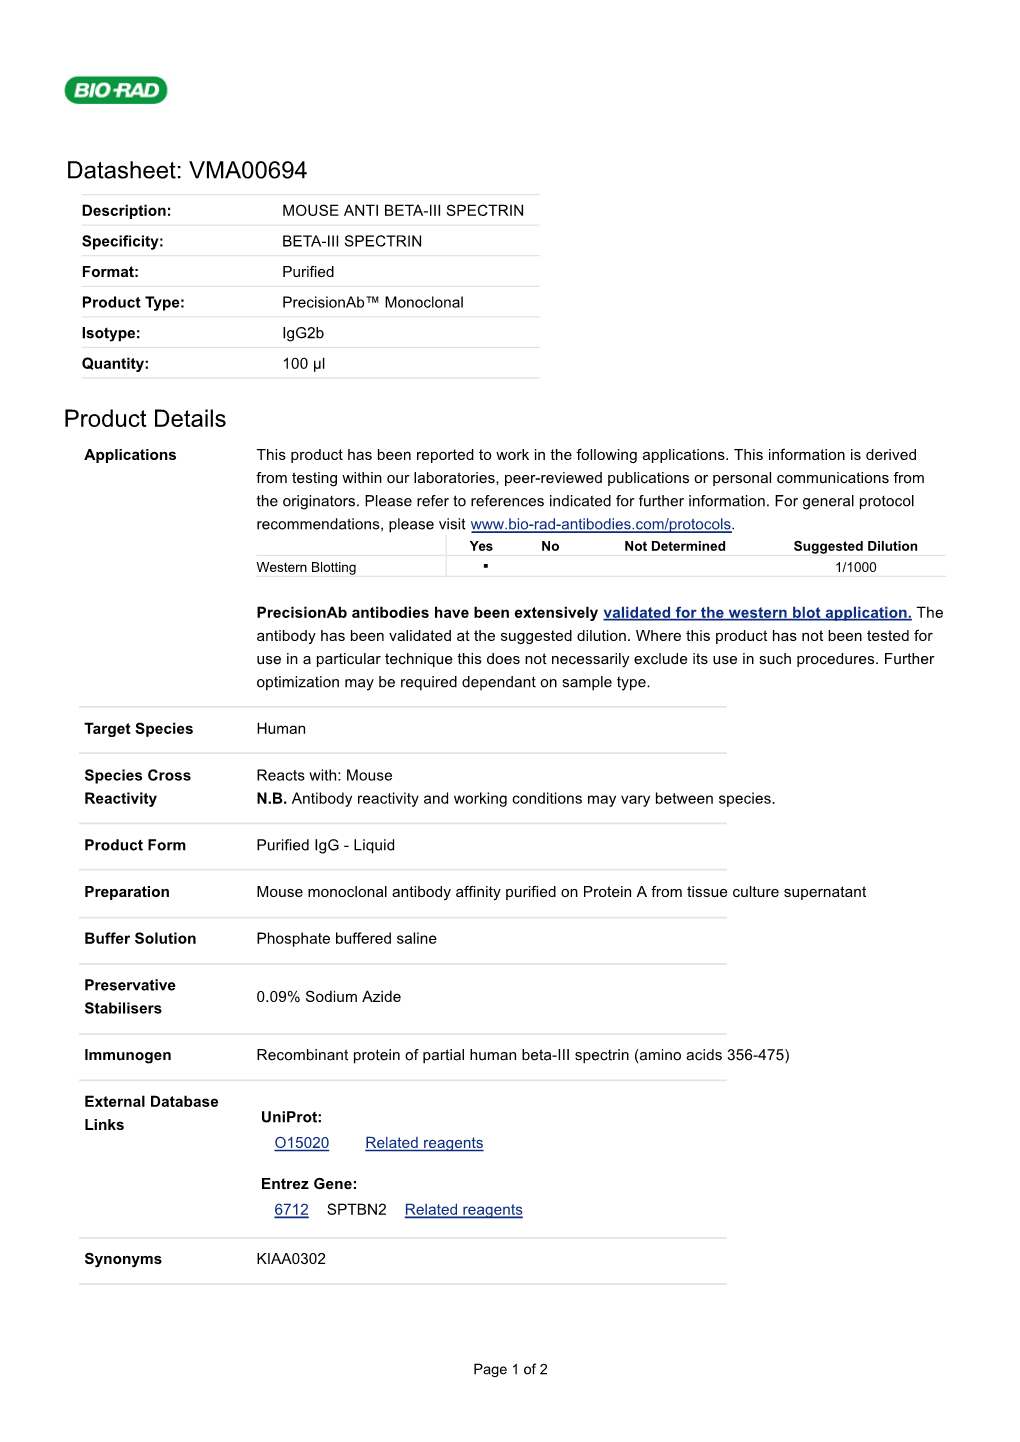 Datasheet: VMA00694 Product Details